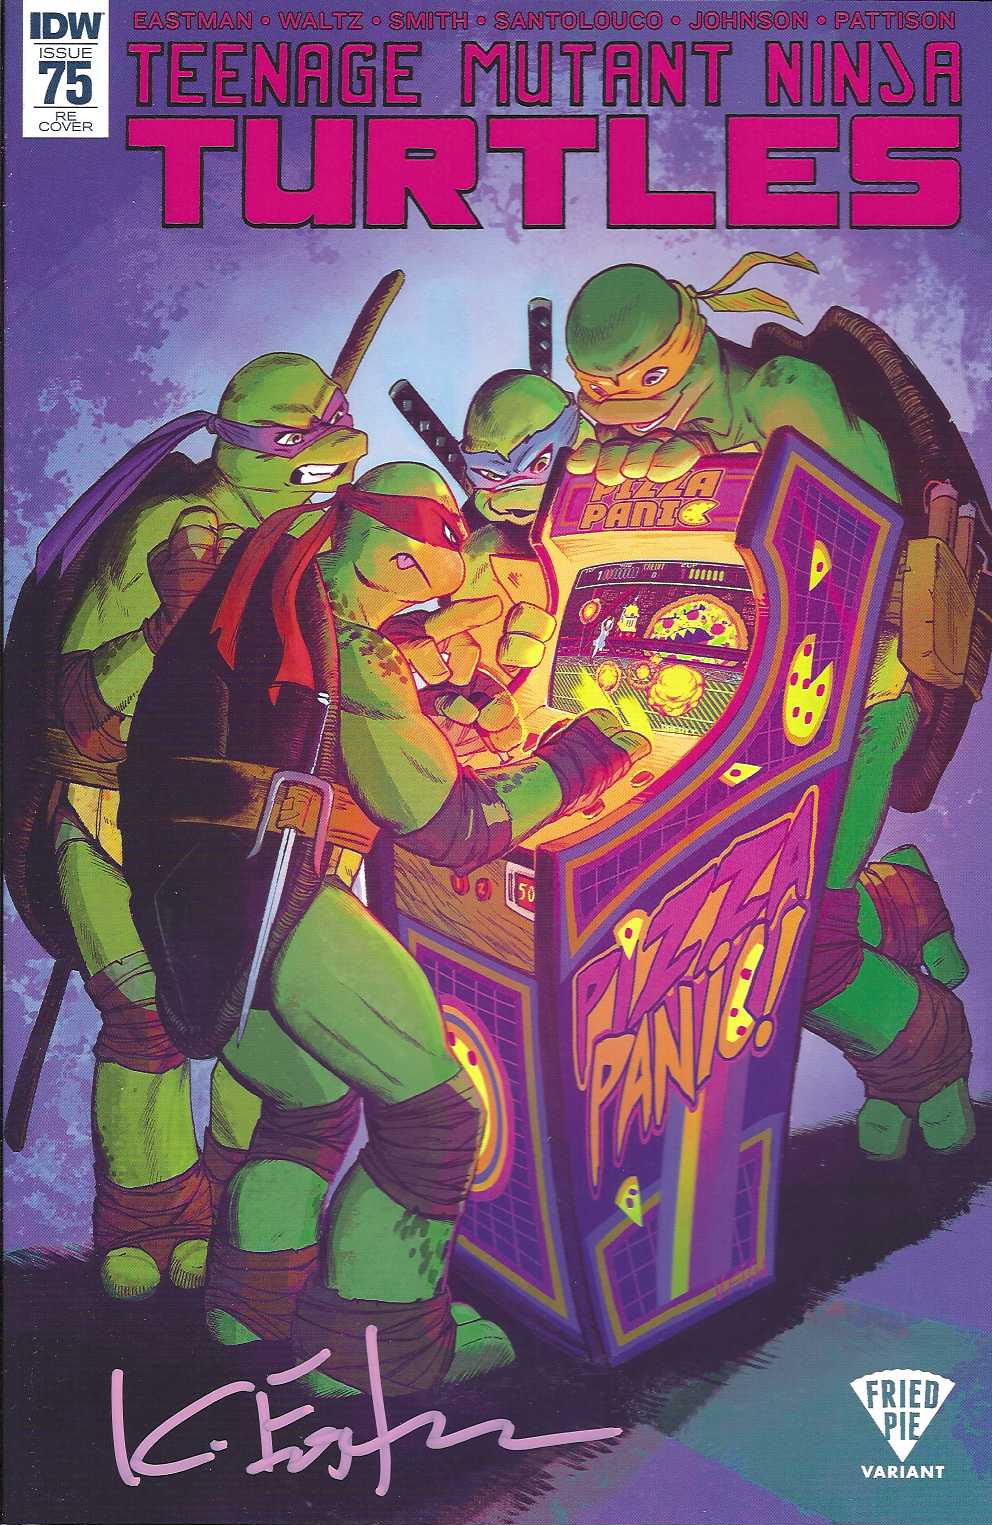 Teenage Mutant Ninja Turtles #75 Cover A - Smith 